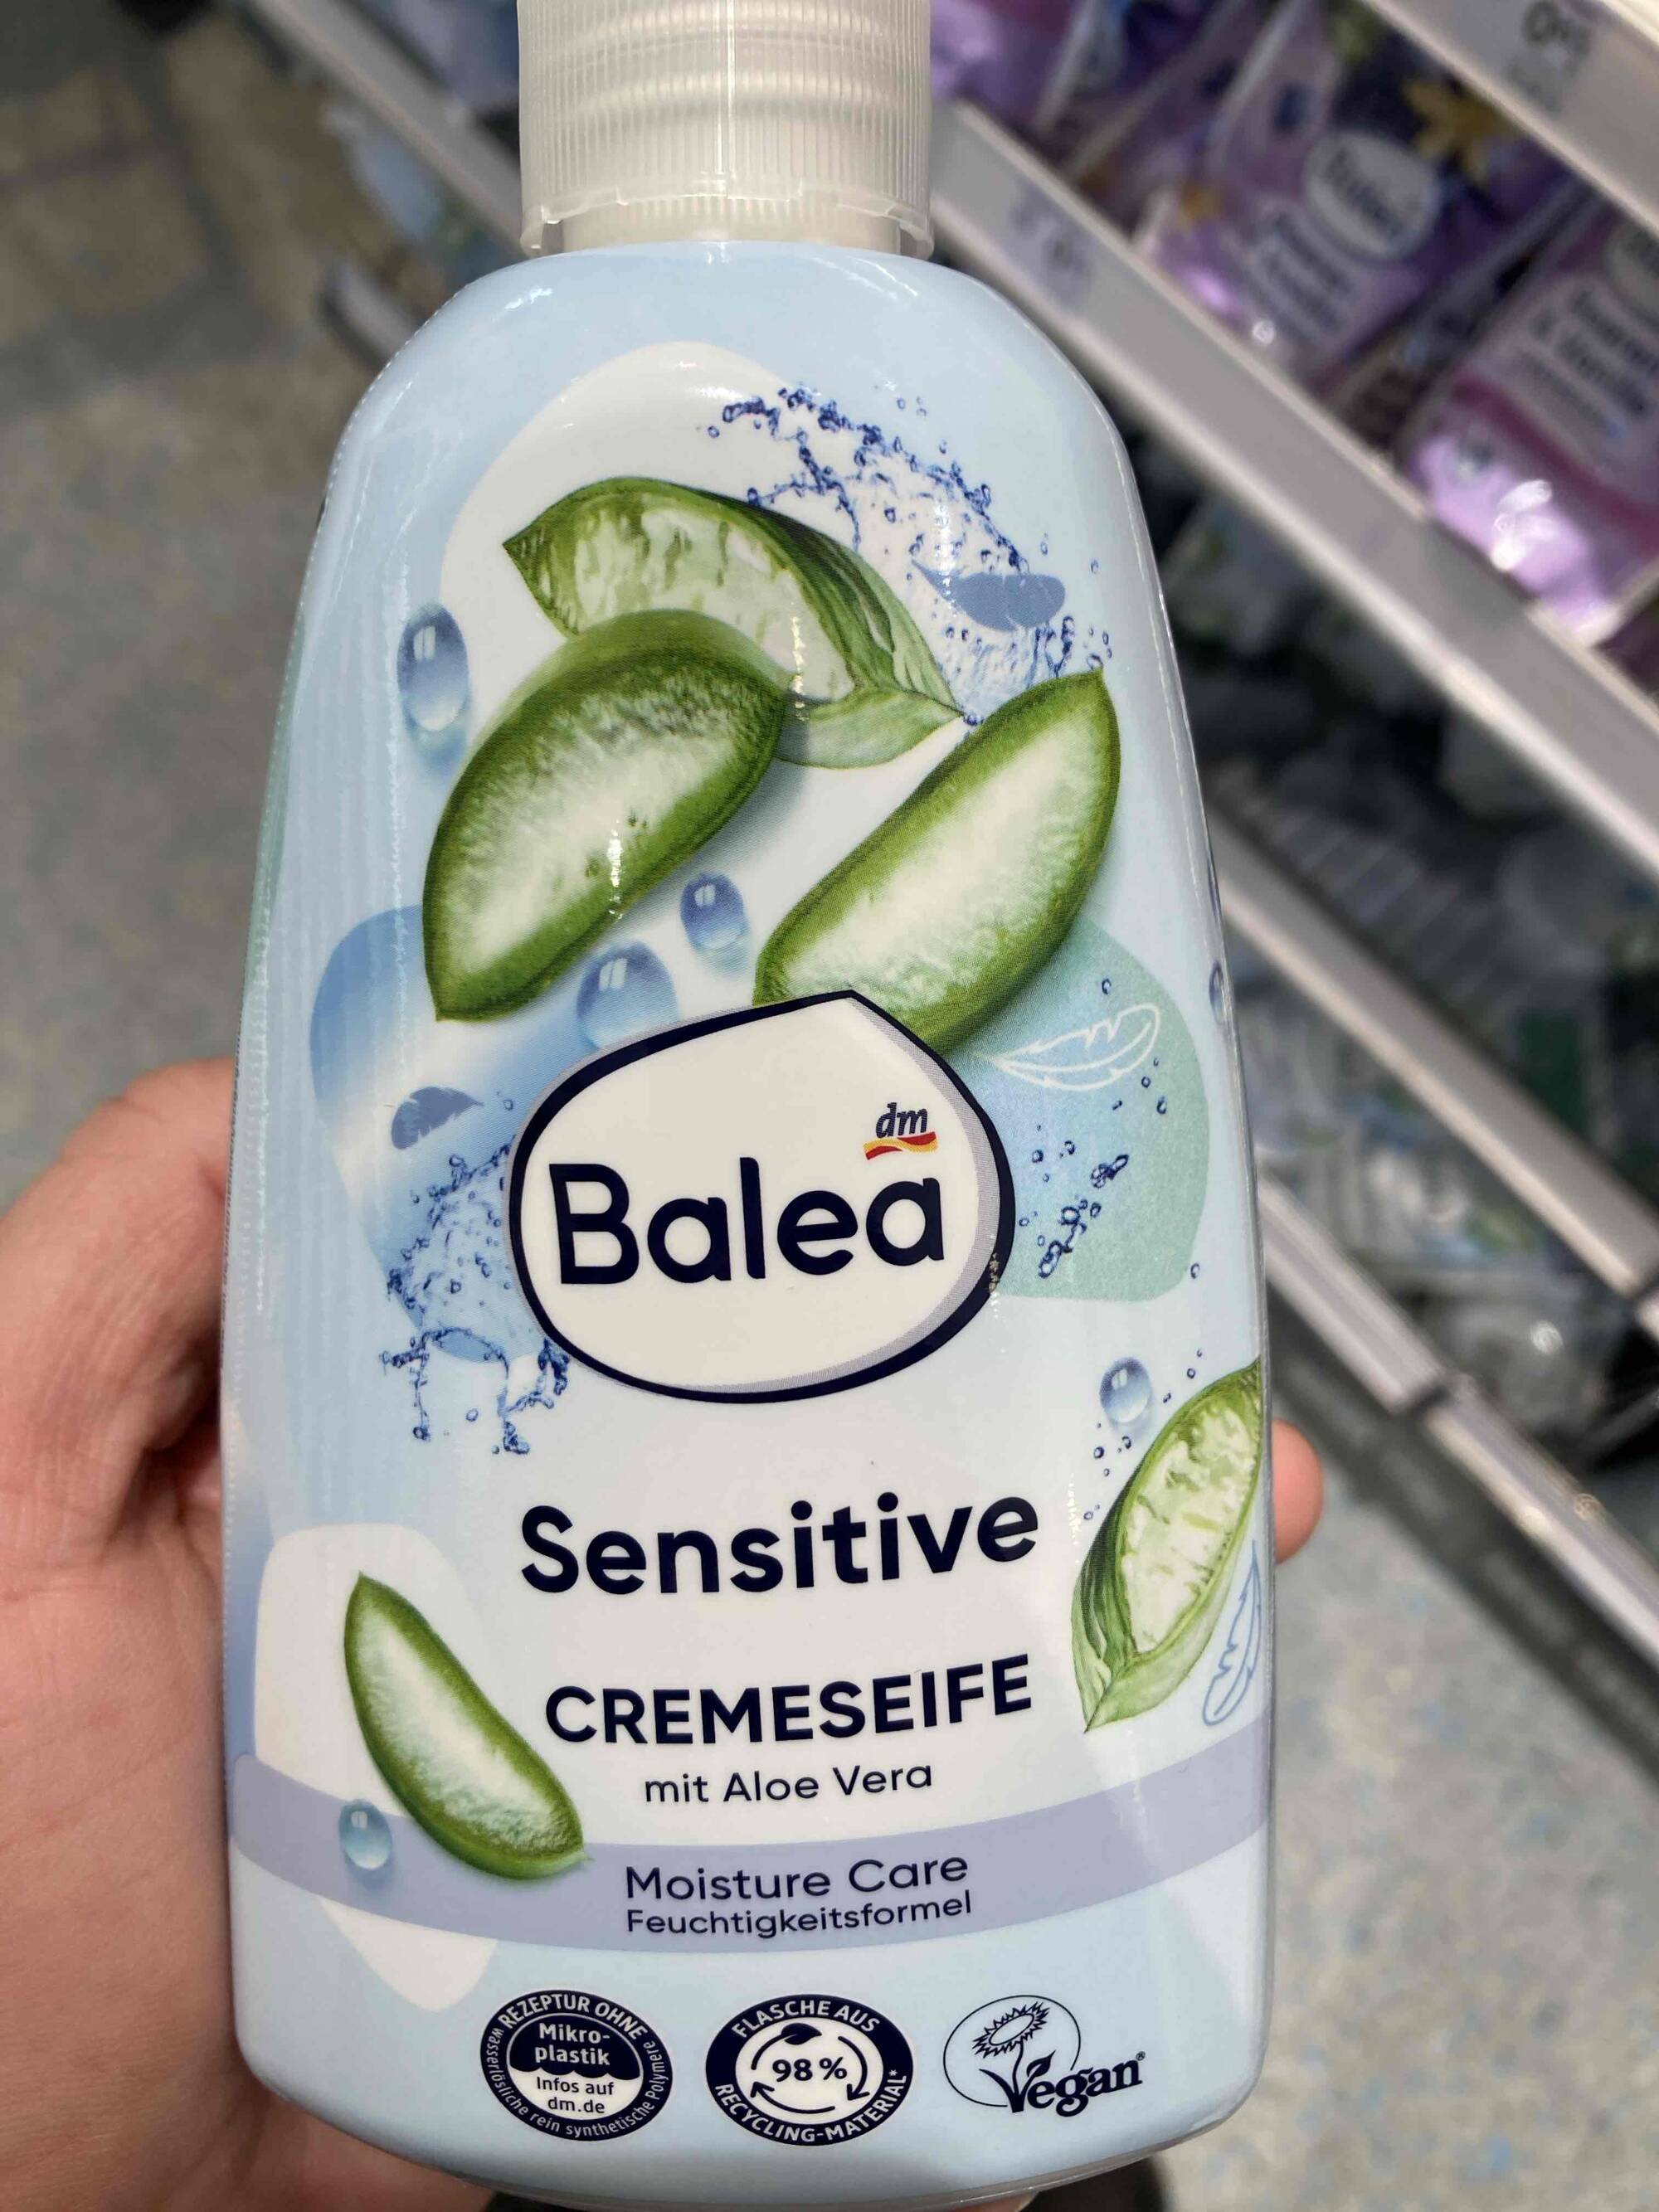 BALEA - Sensitive cremeseife mit aloe vera